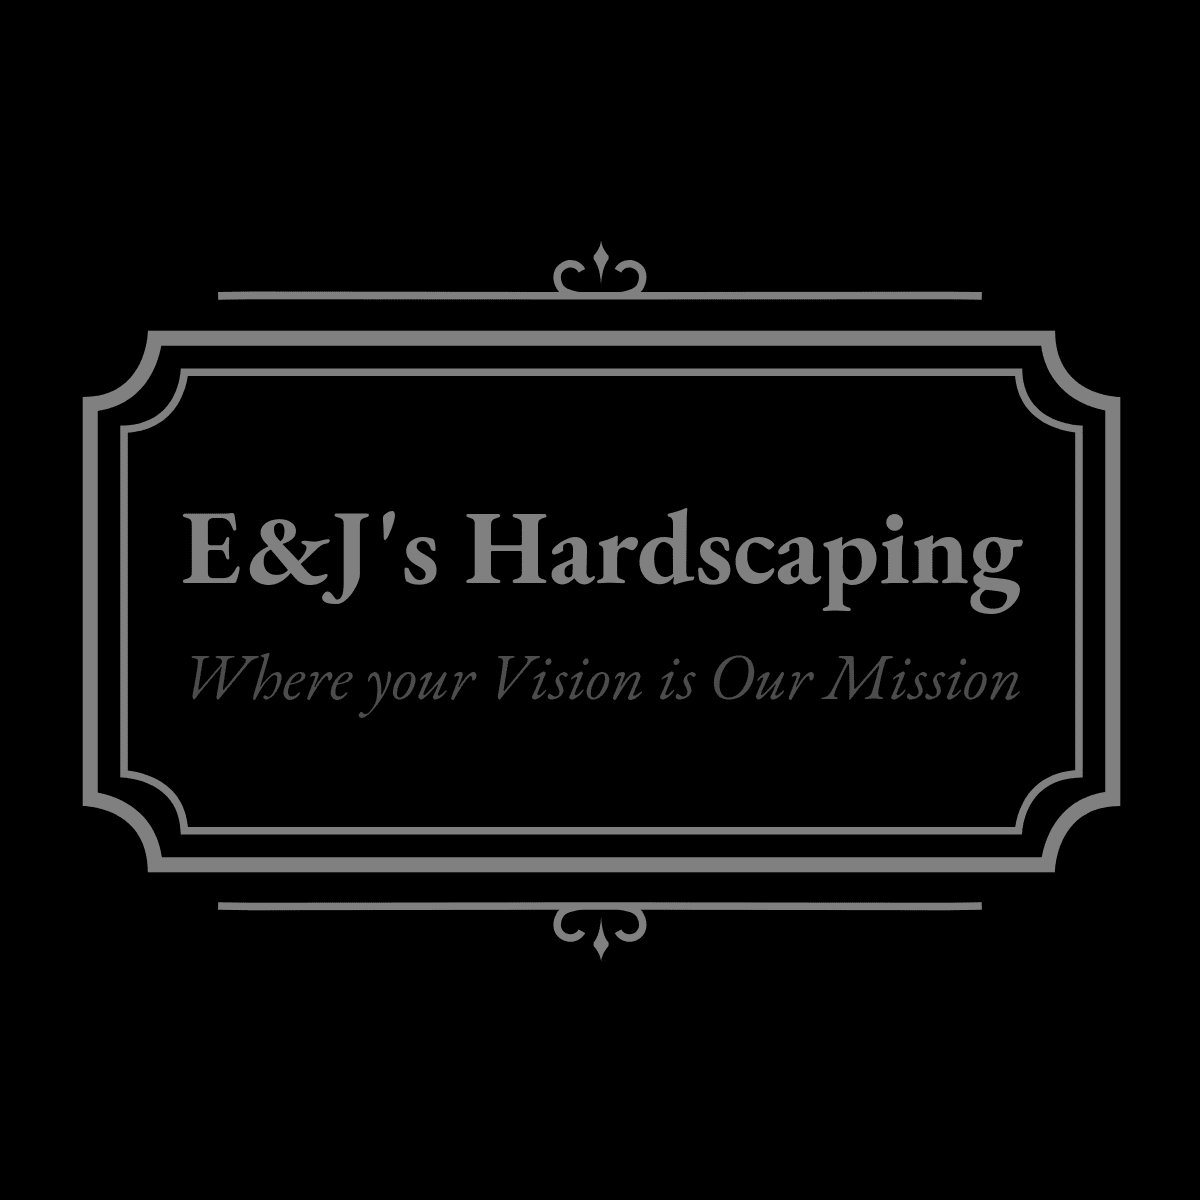 E & J's Hardscaping